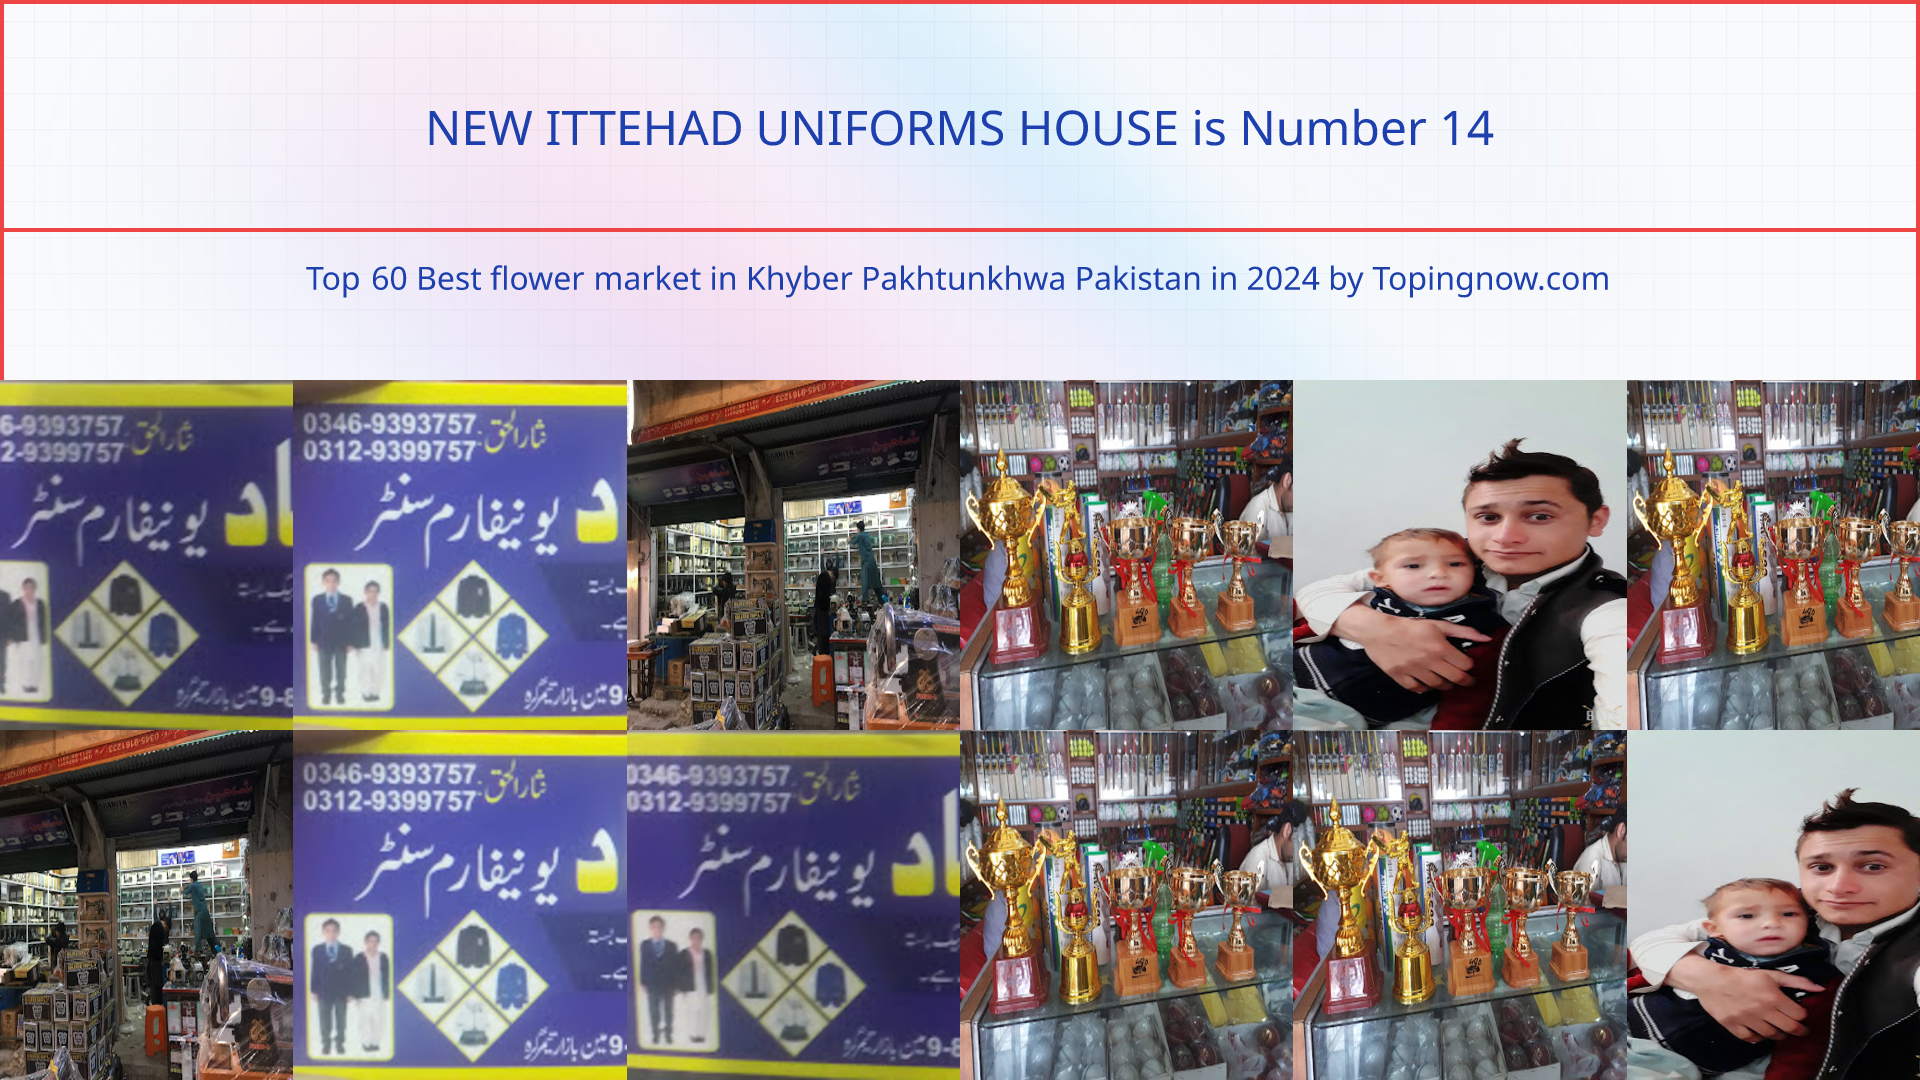 NEW ITTEHAD UNIFORMS HOUSE: Top 60 Best flower market in Khyber Pakhtunkhwa Pakistan in 2024